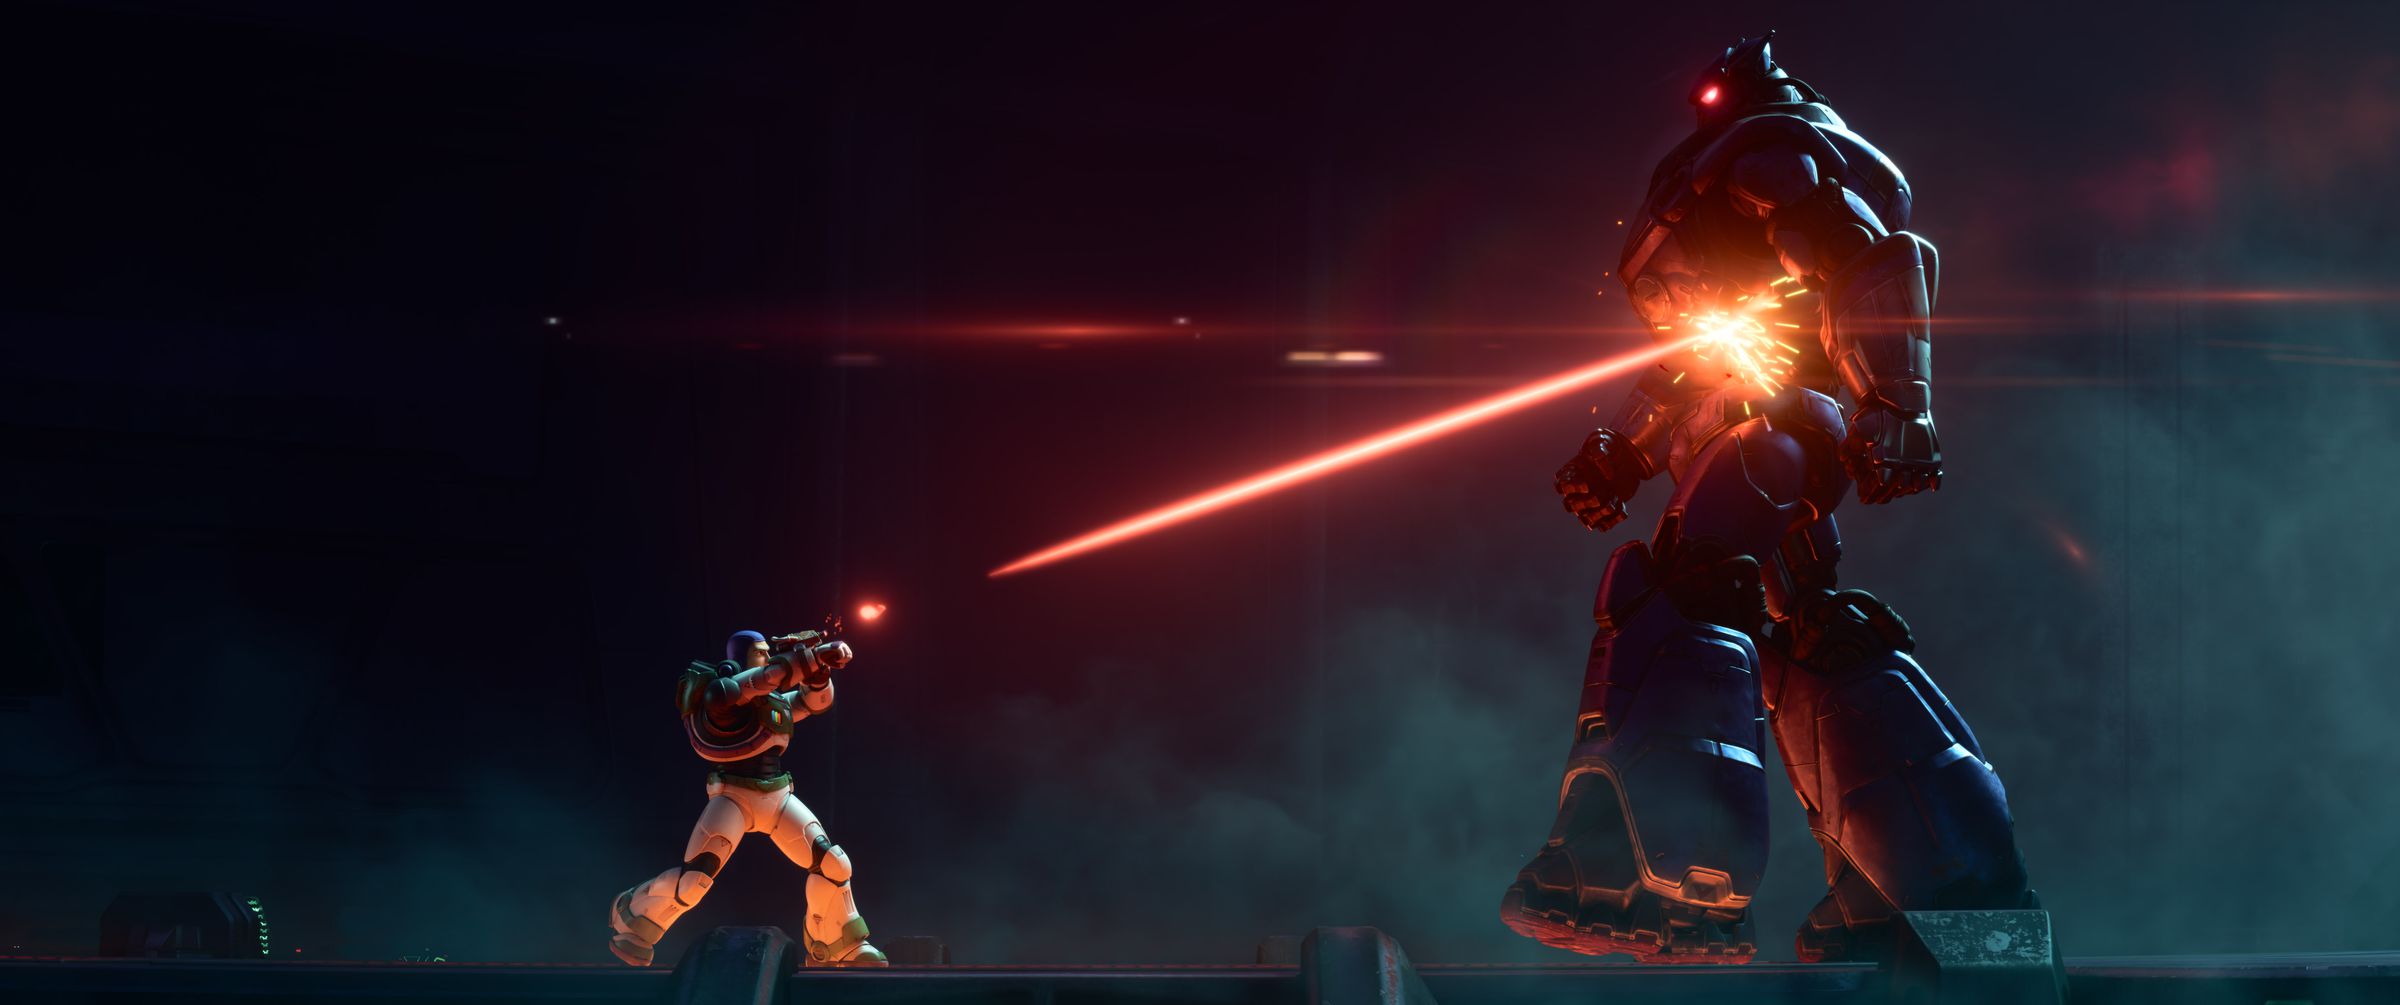 Buzz shooting a laser at Zerg.